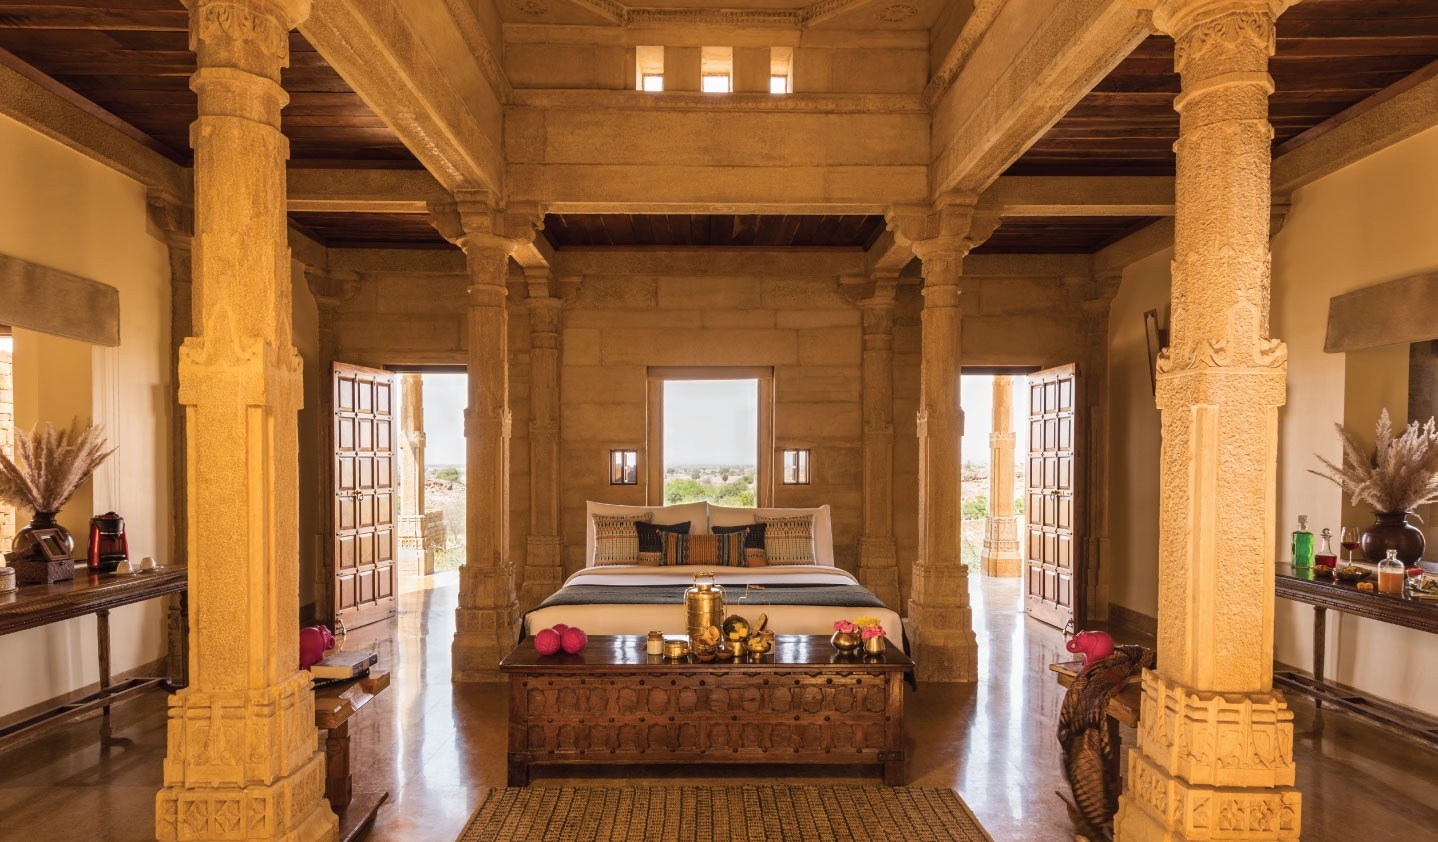 The Jaisalmer Haveli room at Suryagarh Palace.